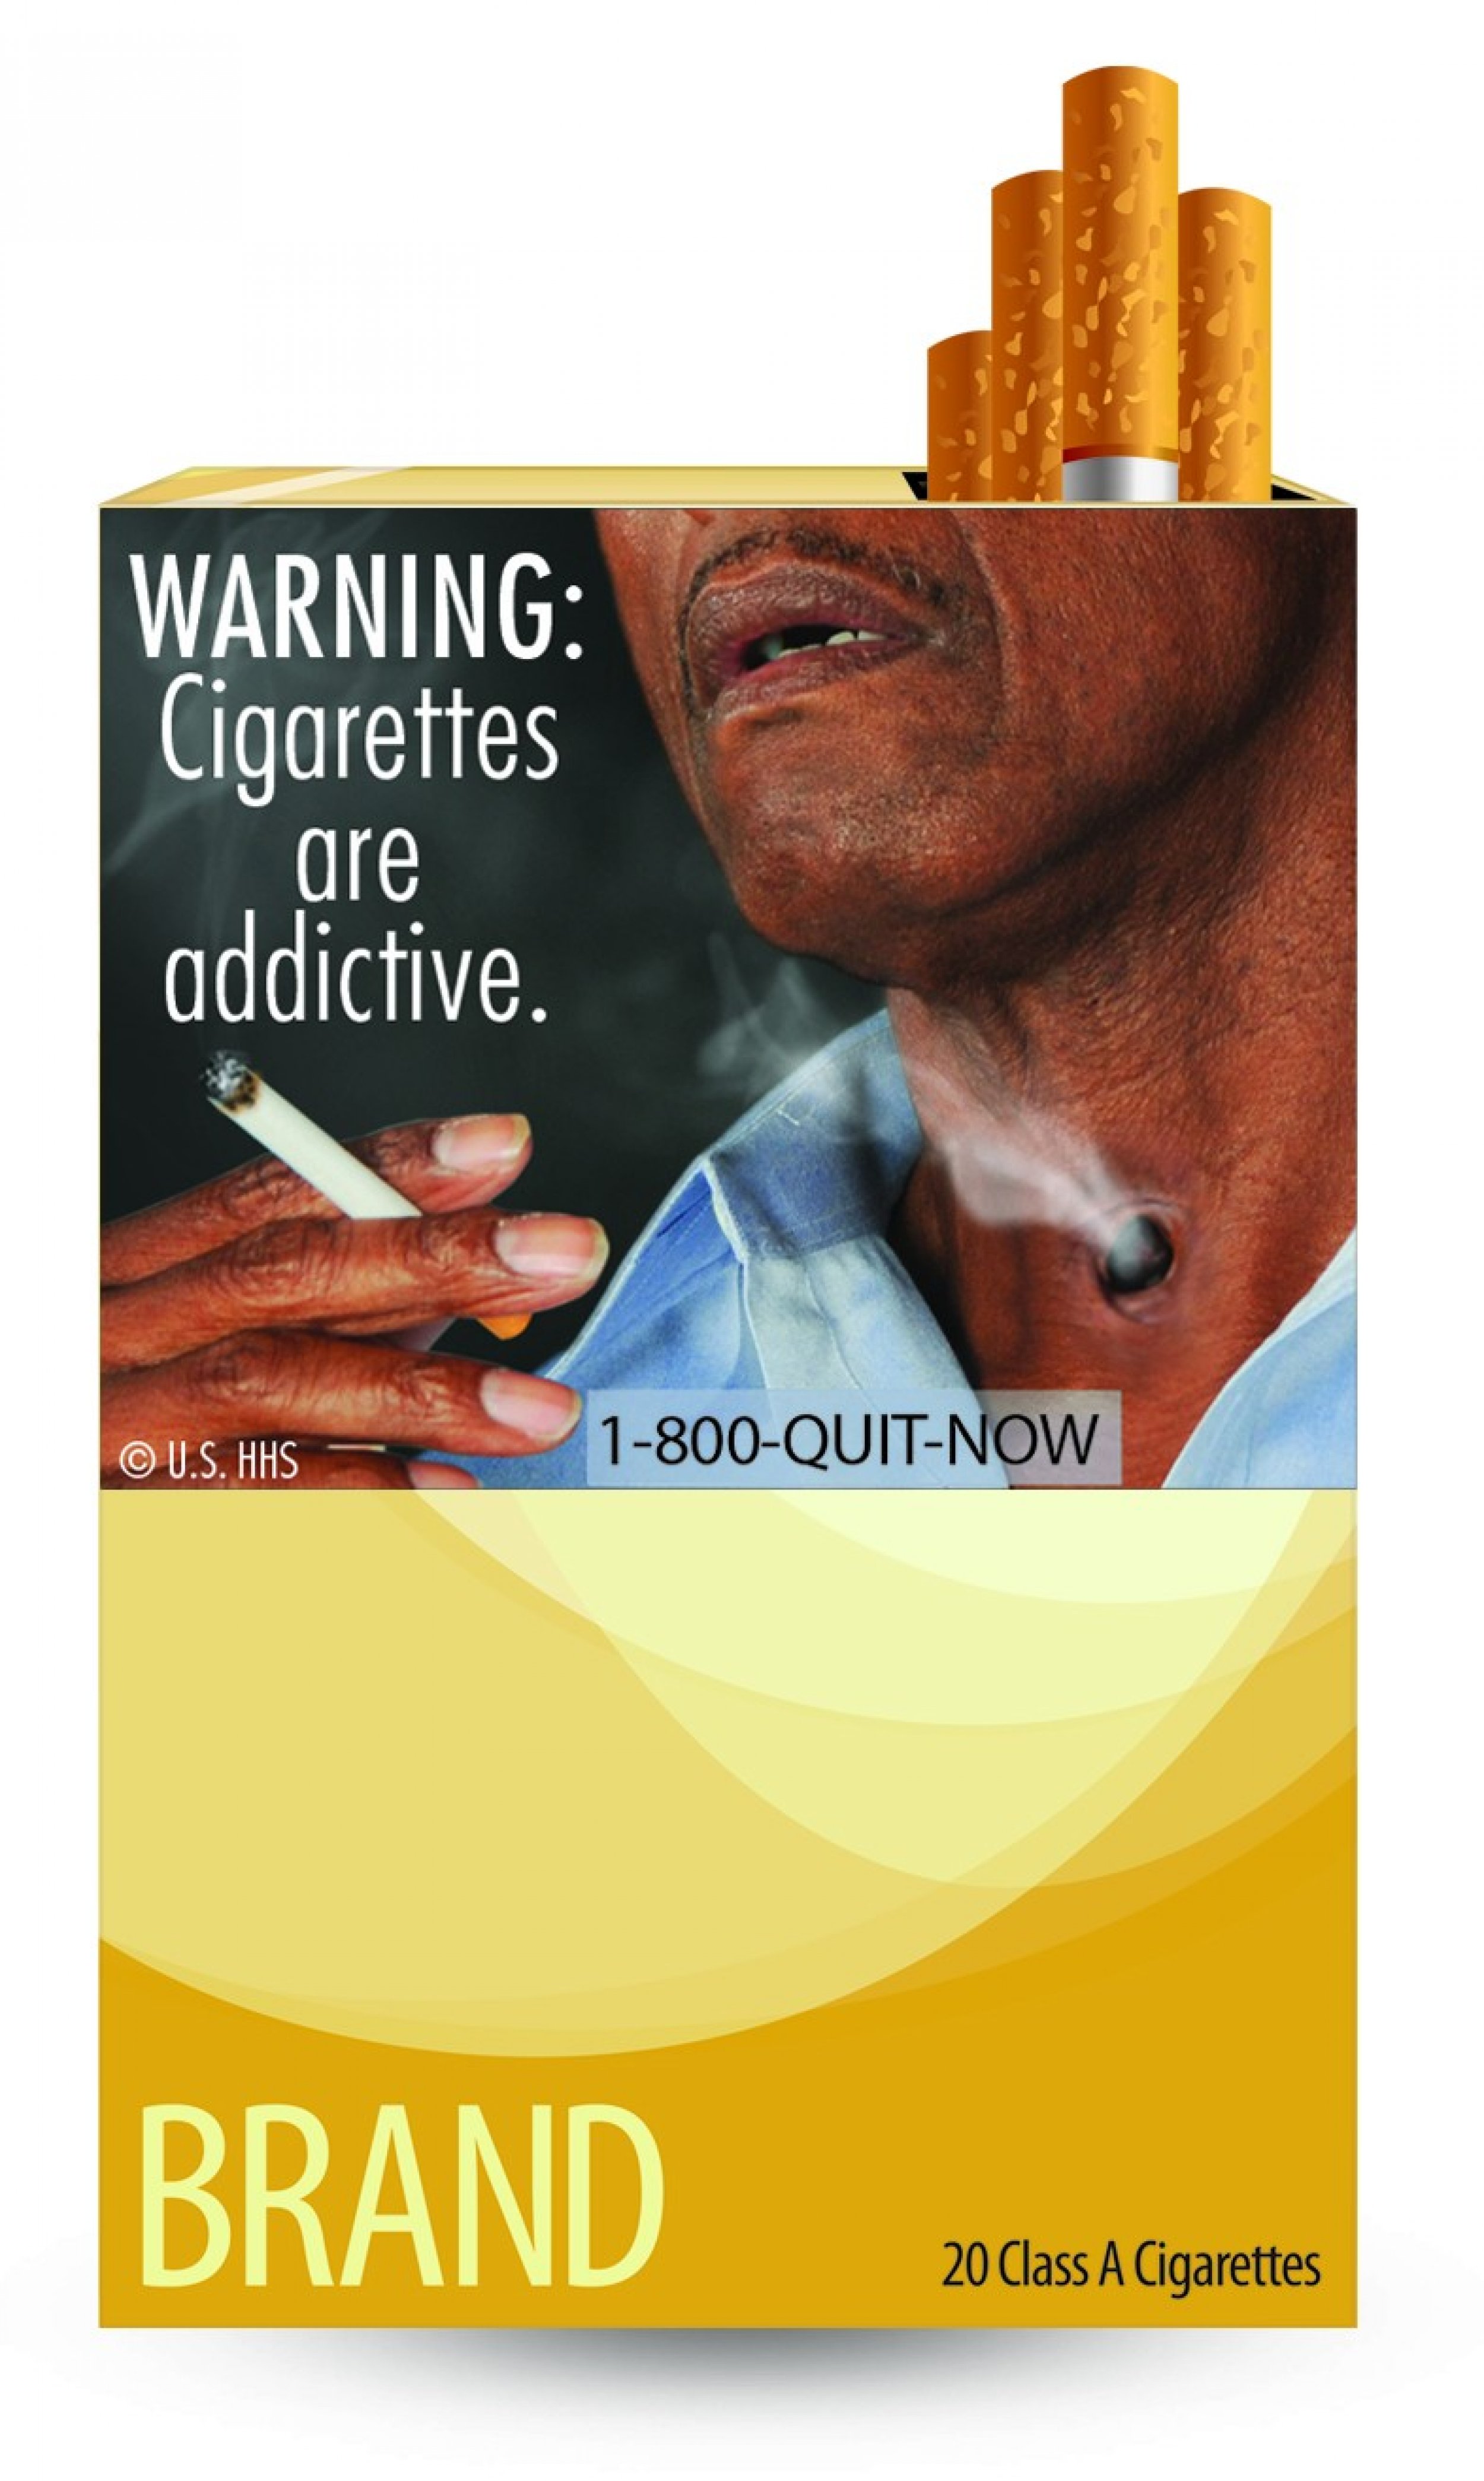 WARNING Cigarettes are addictive.